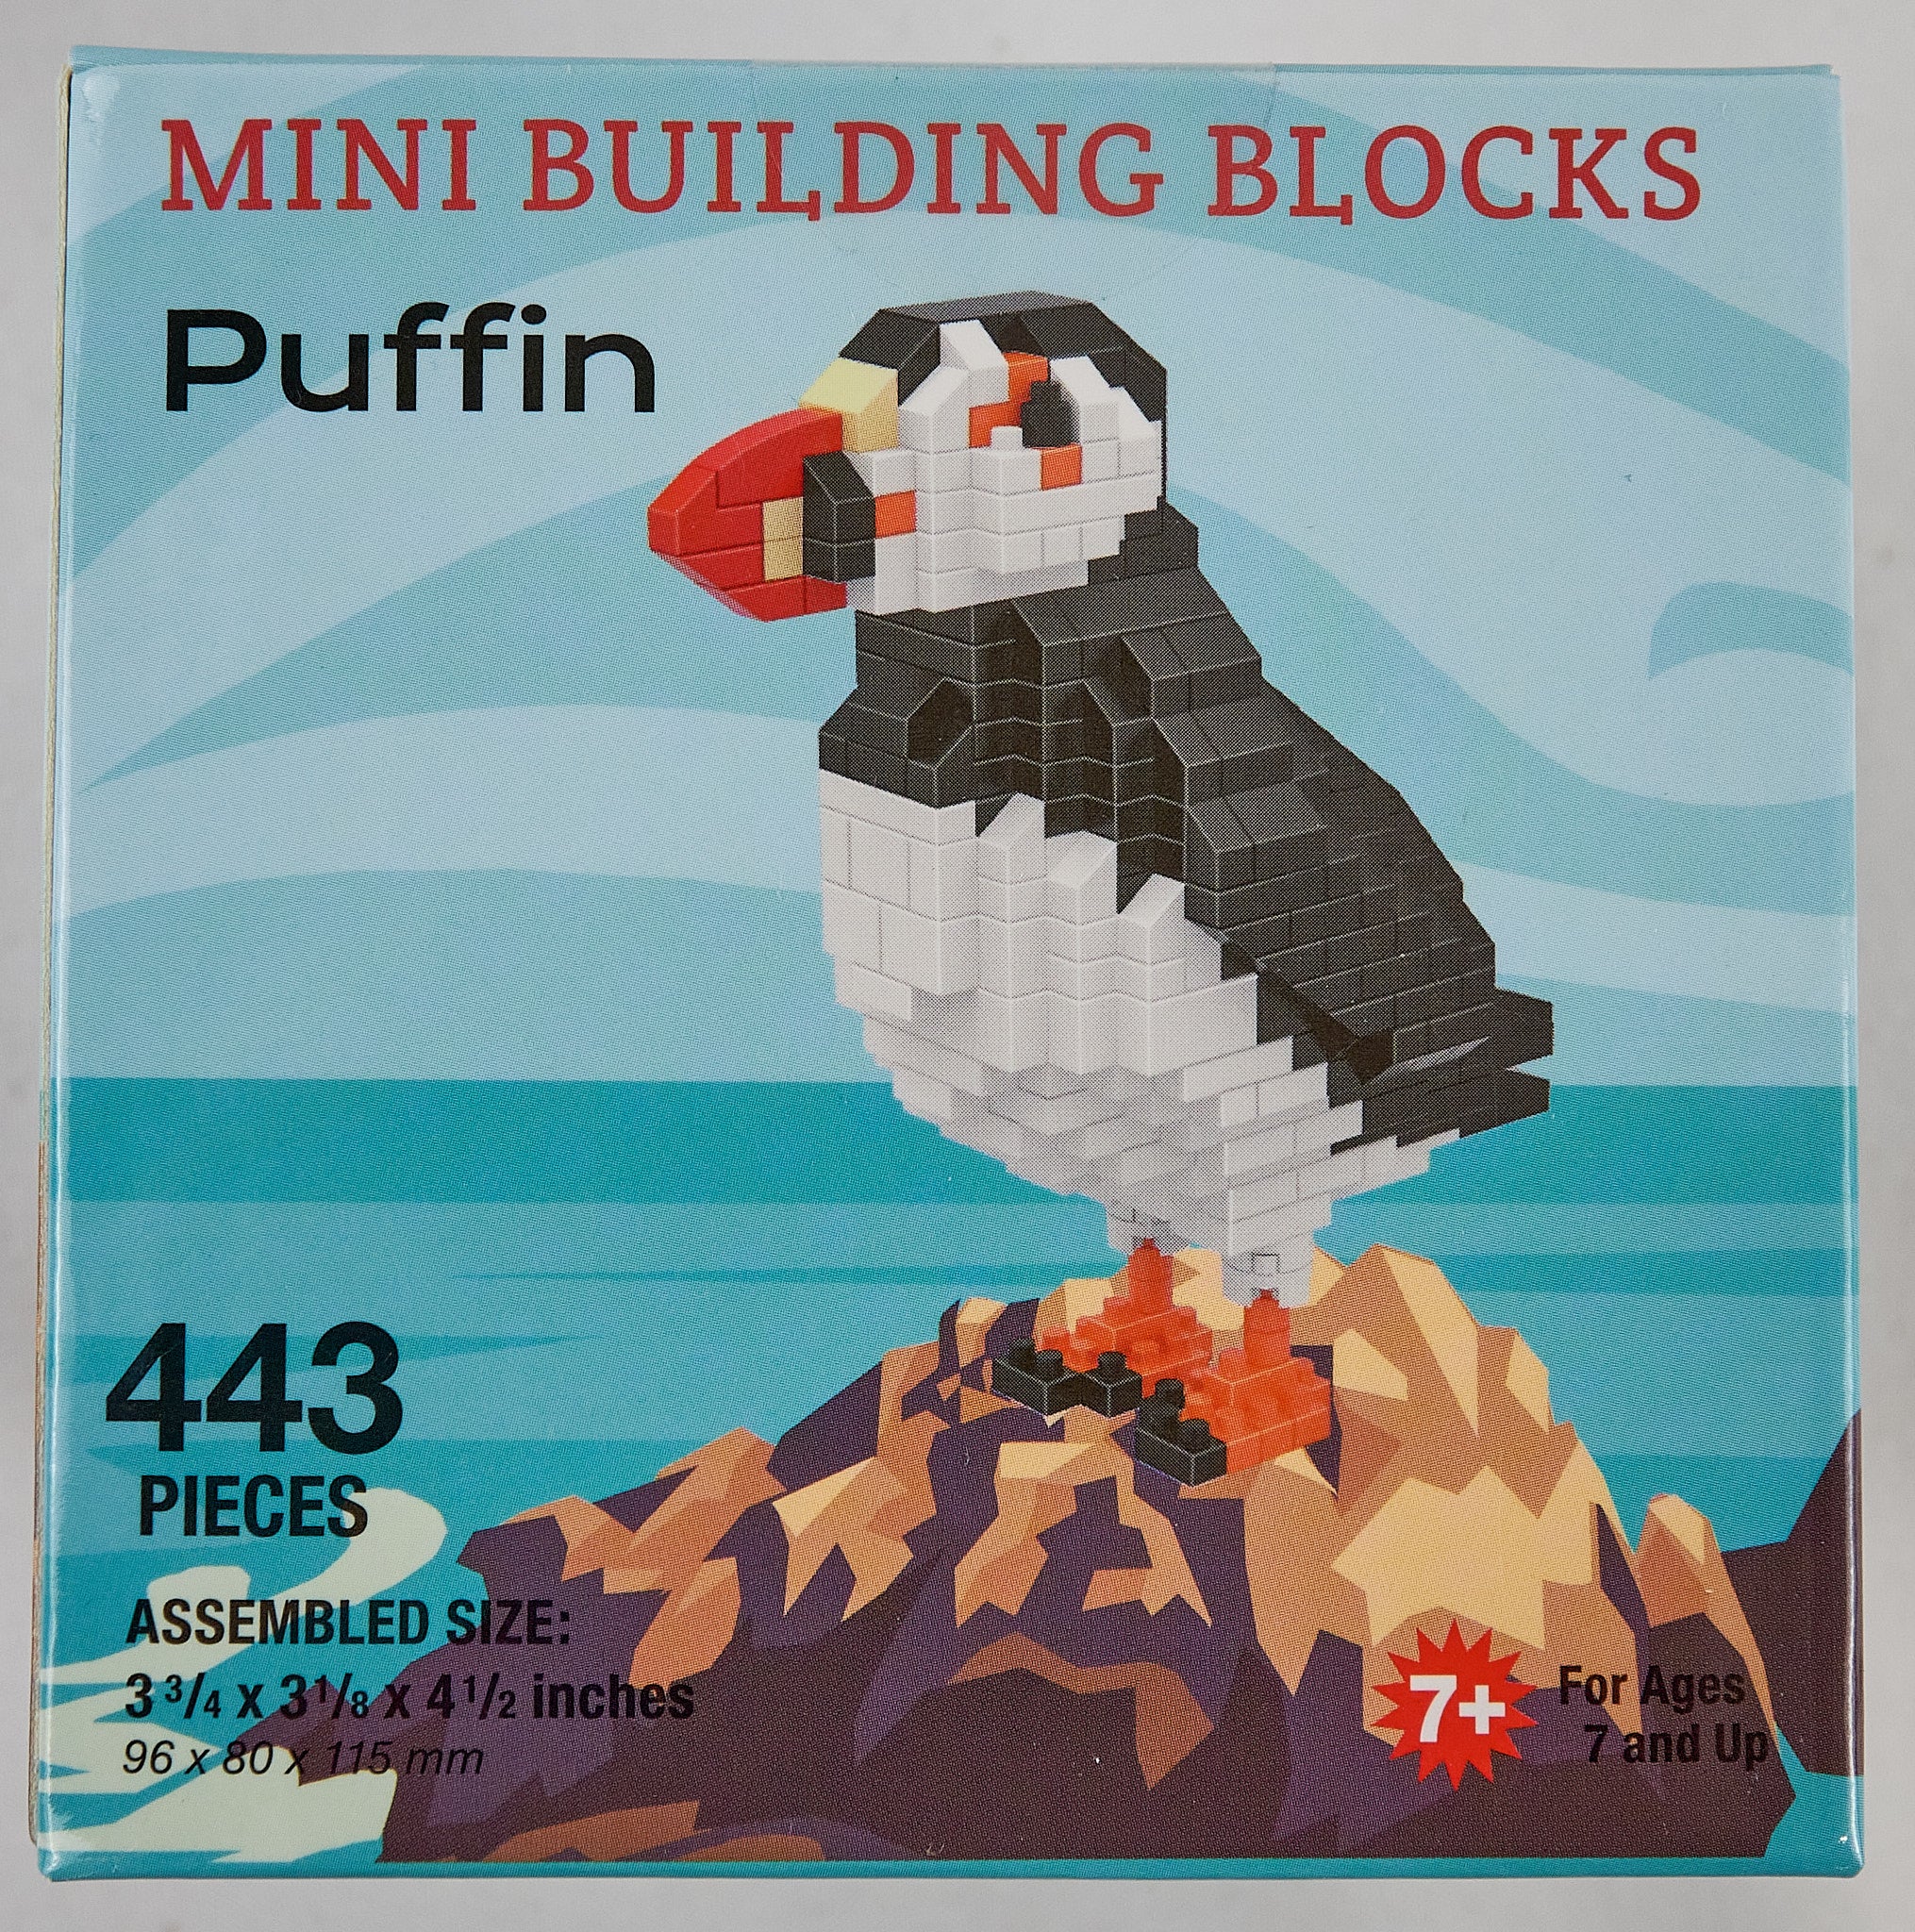 Puffin Mini Building Blocks